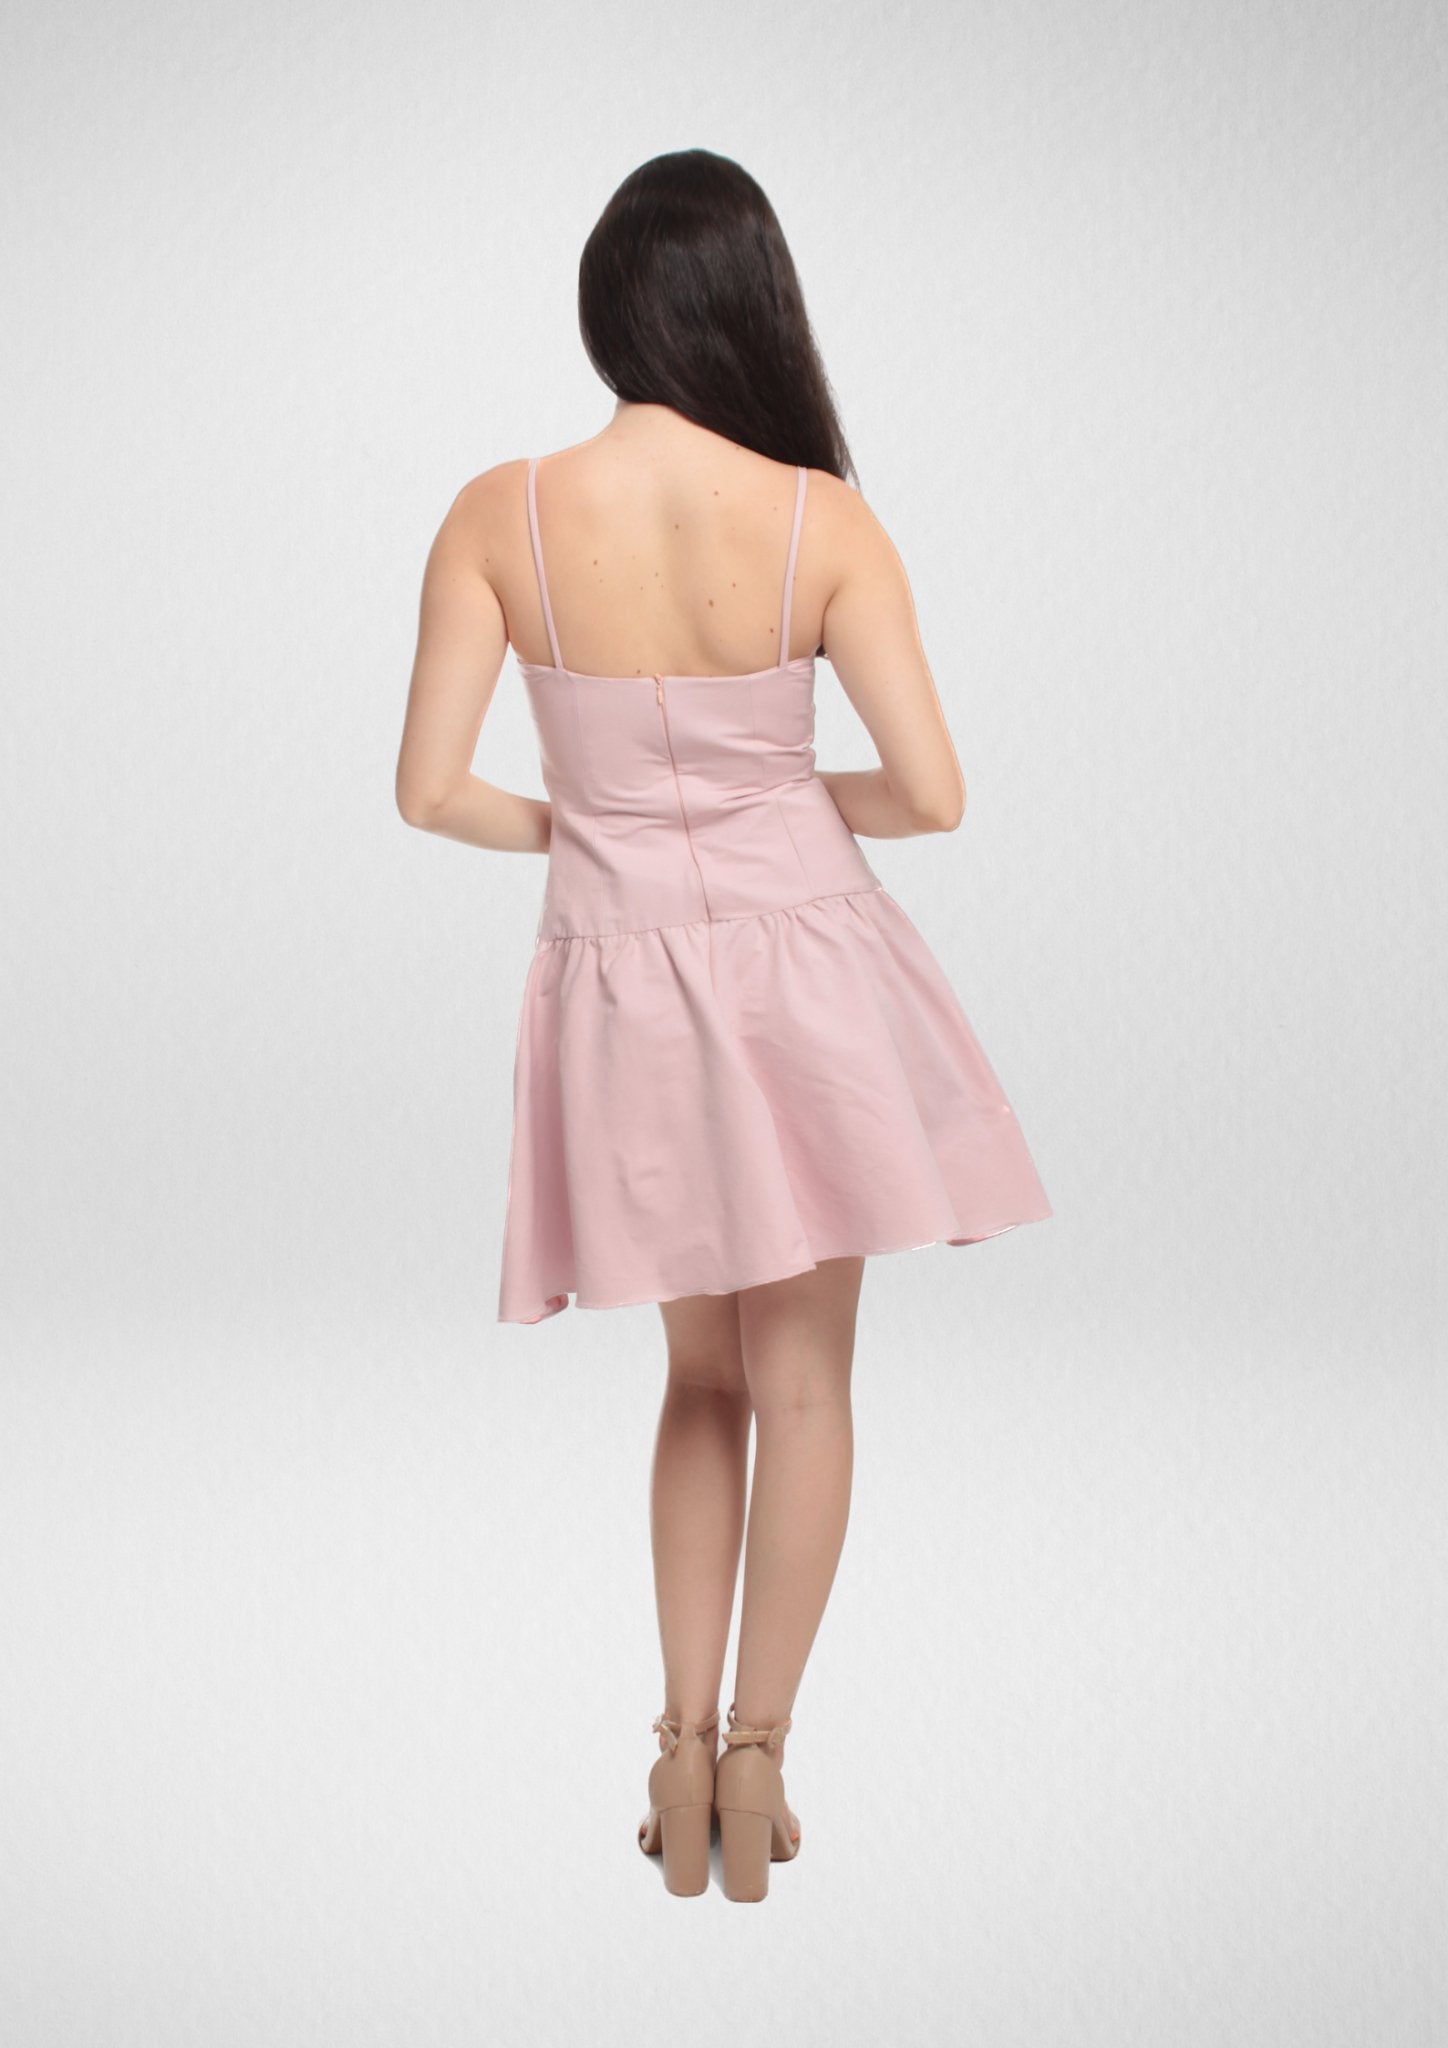 Cottagecore Elegant Dress Sewing Pattern with Mini or Maxi Alternative [Aurora] - Friedlies